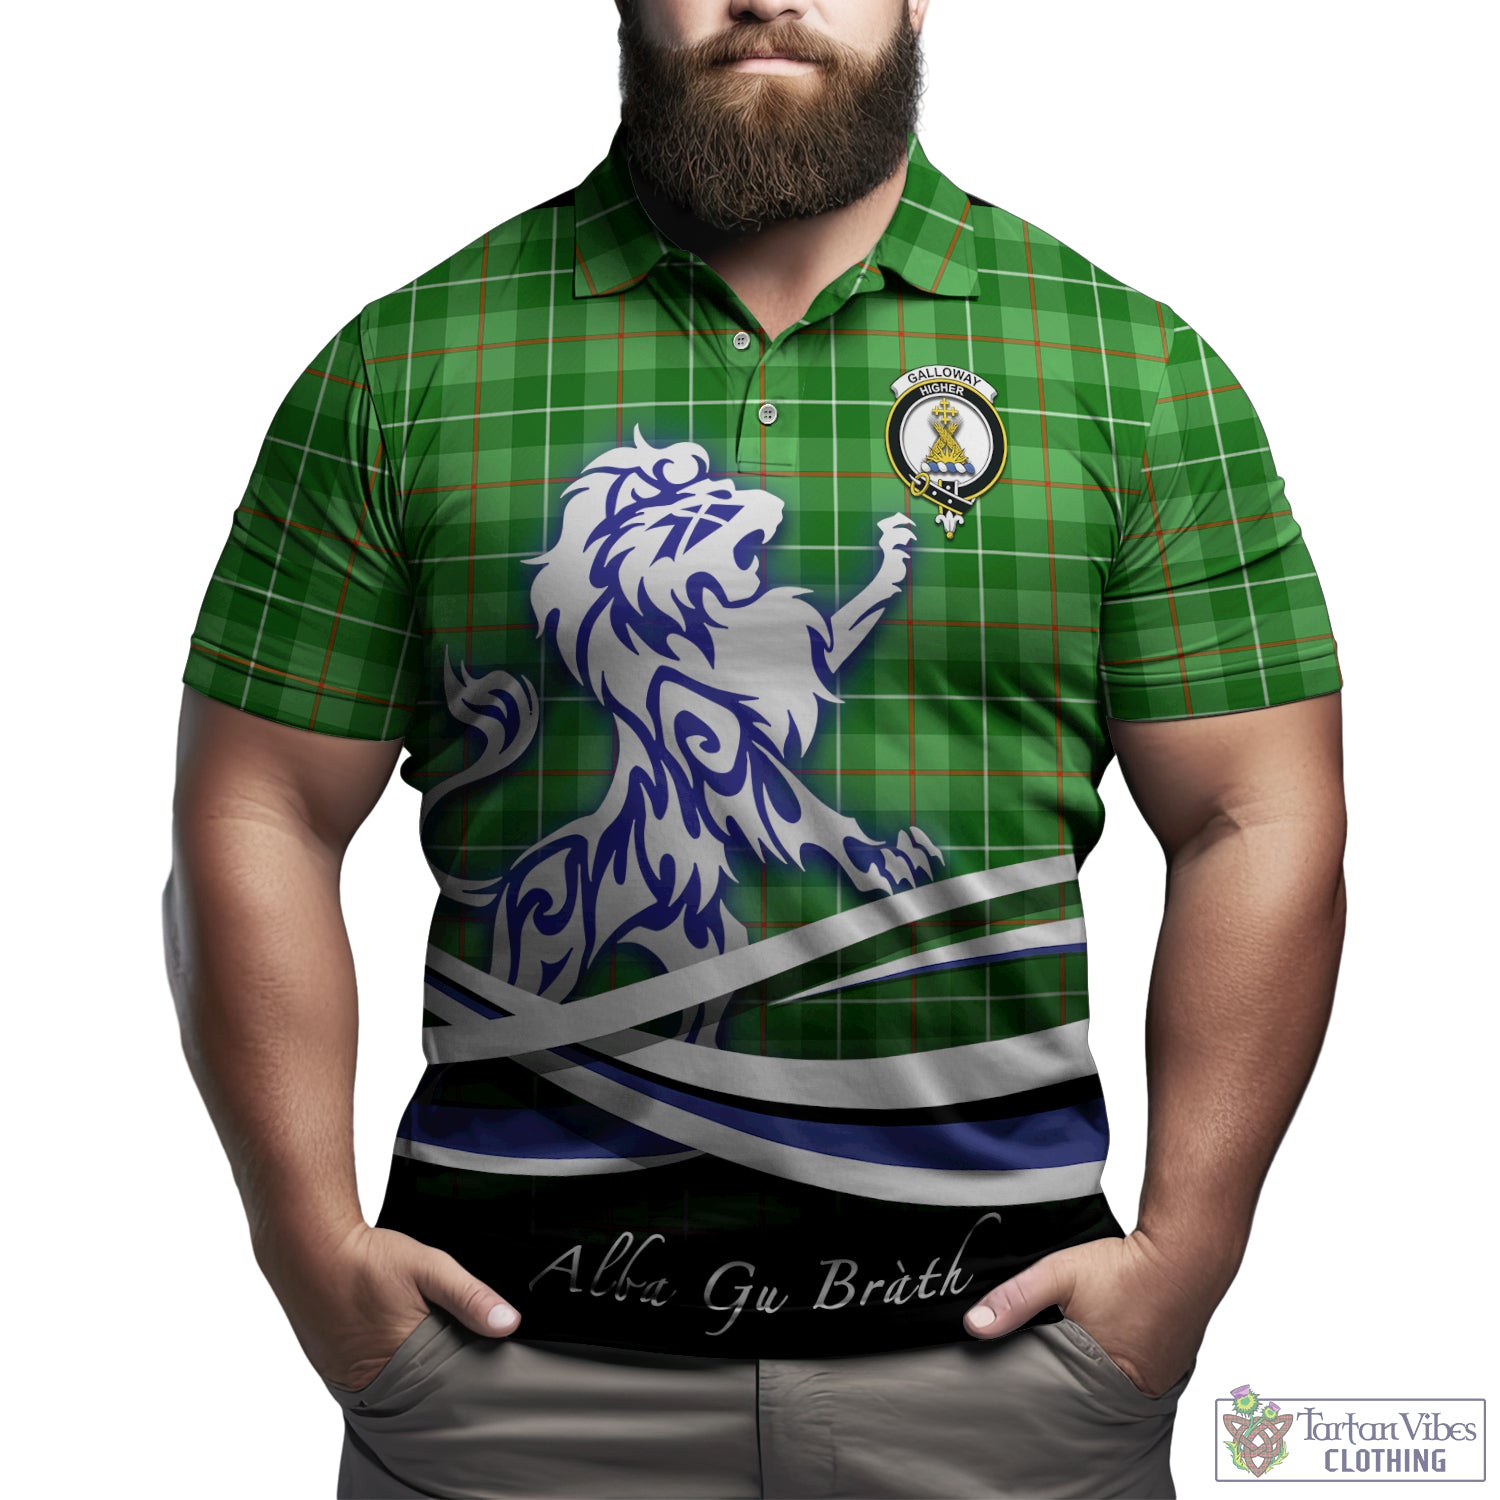 galloway-tartan-polo-shirt-with-alba-gu-brath-regal-lion-emblem